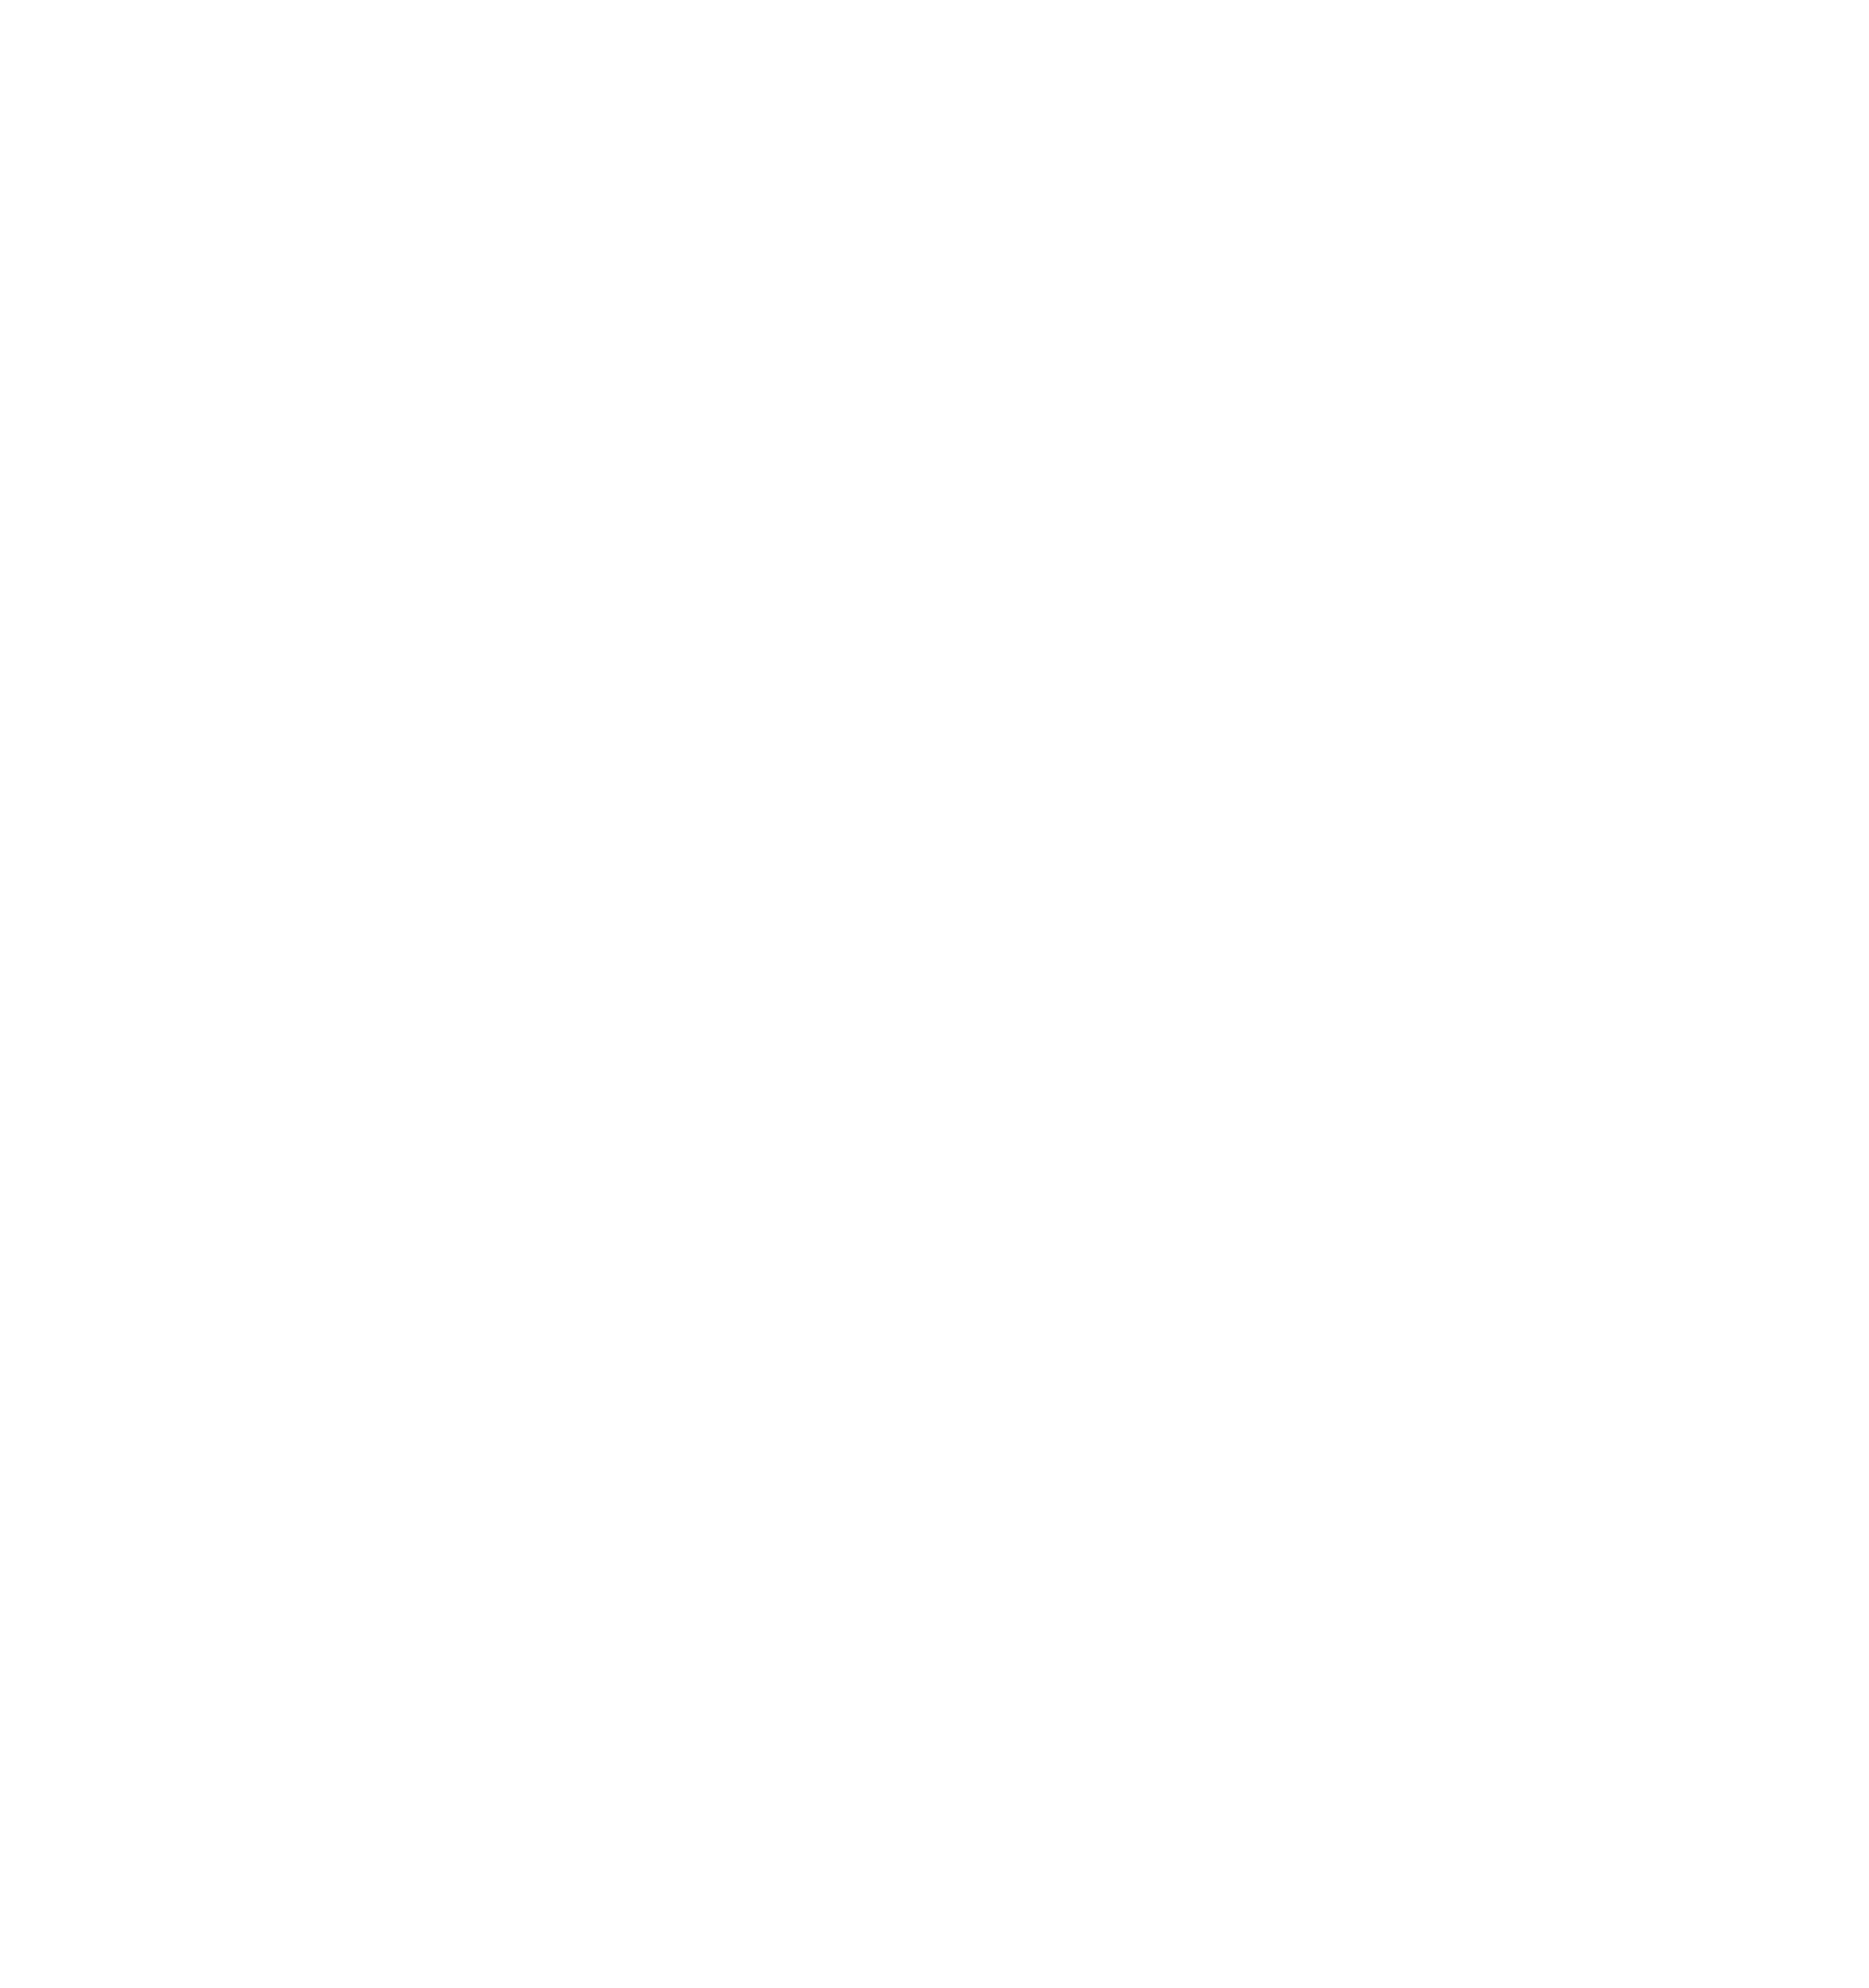 hair transplants of the royal liver building logo